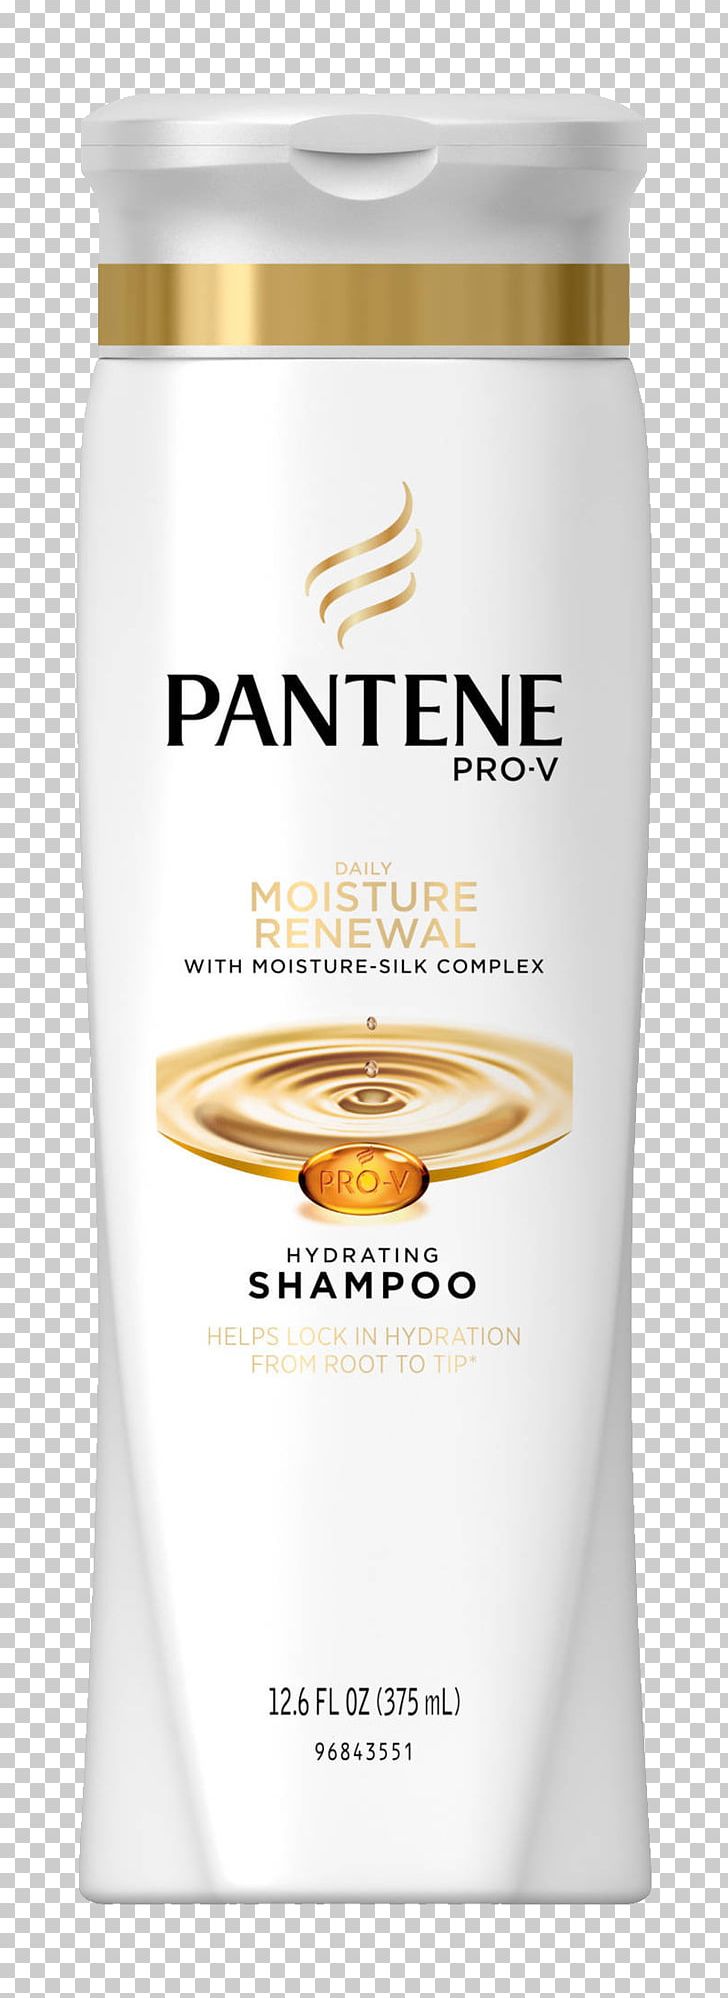 Shampoo PNG, Clipart, Shampoo Free PNG Download